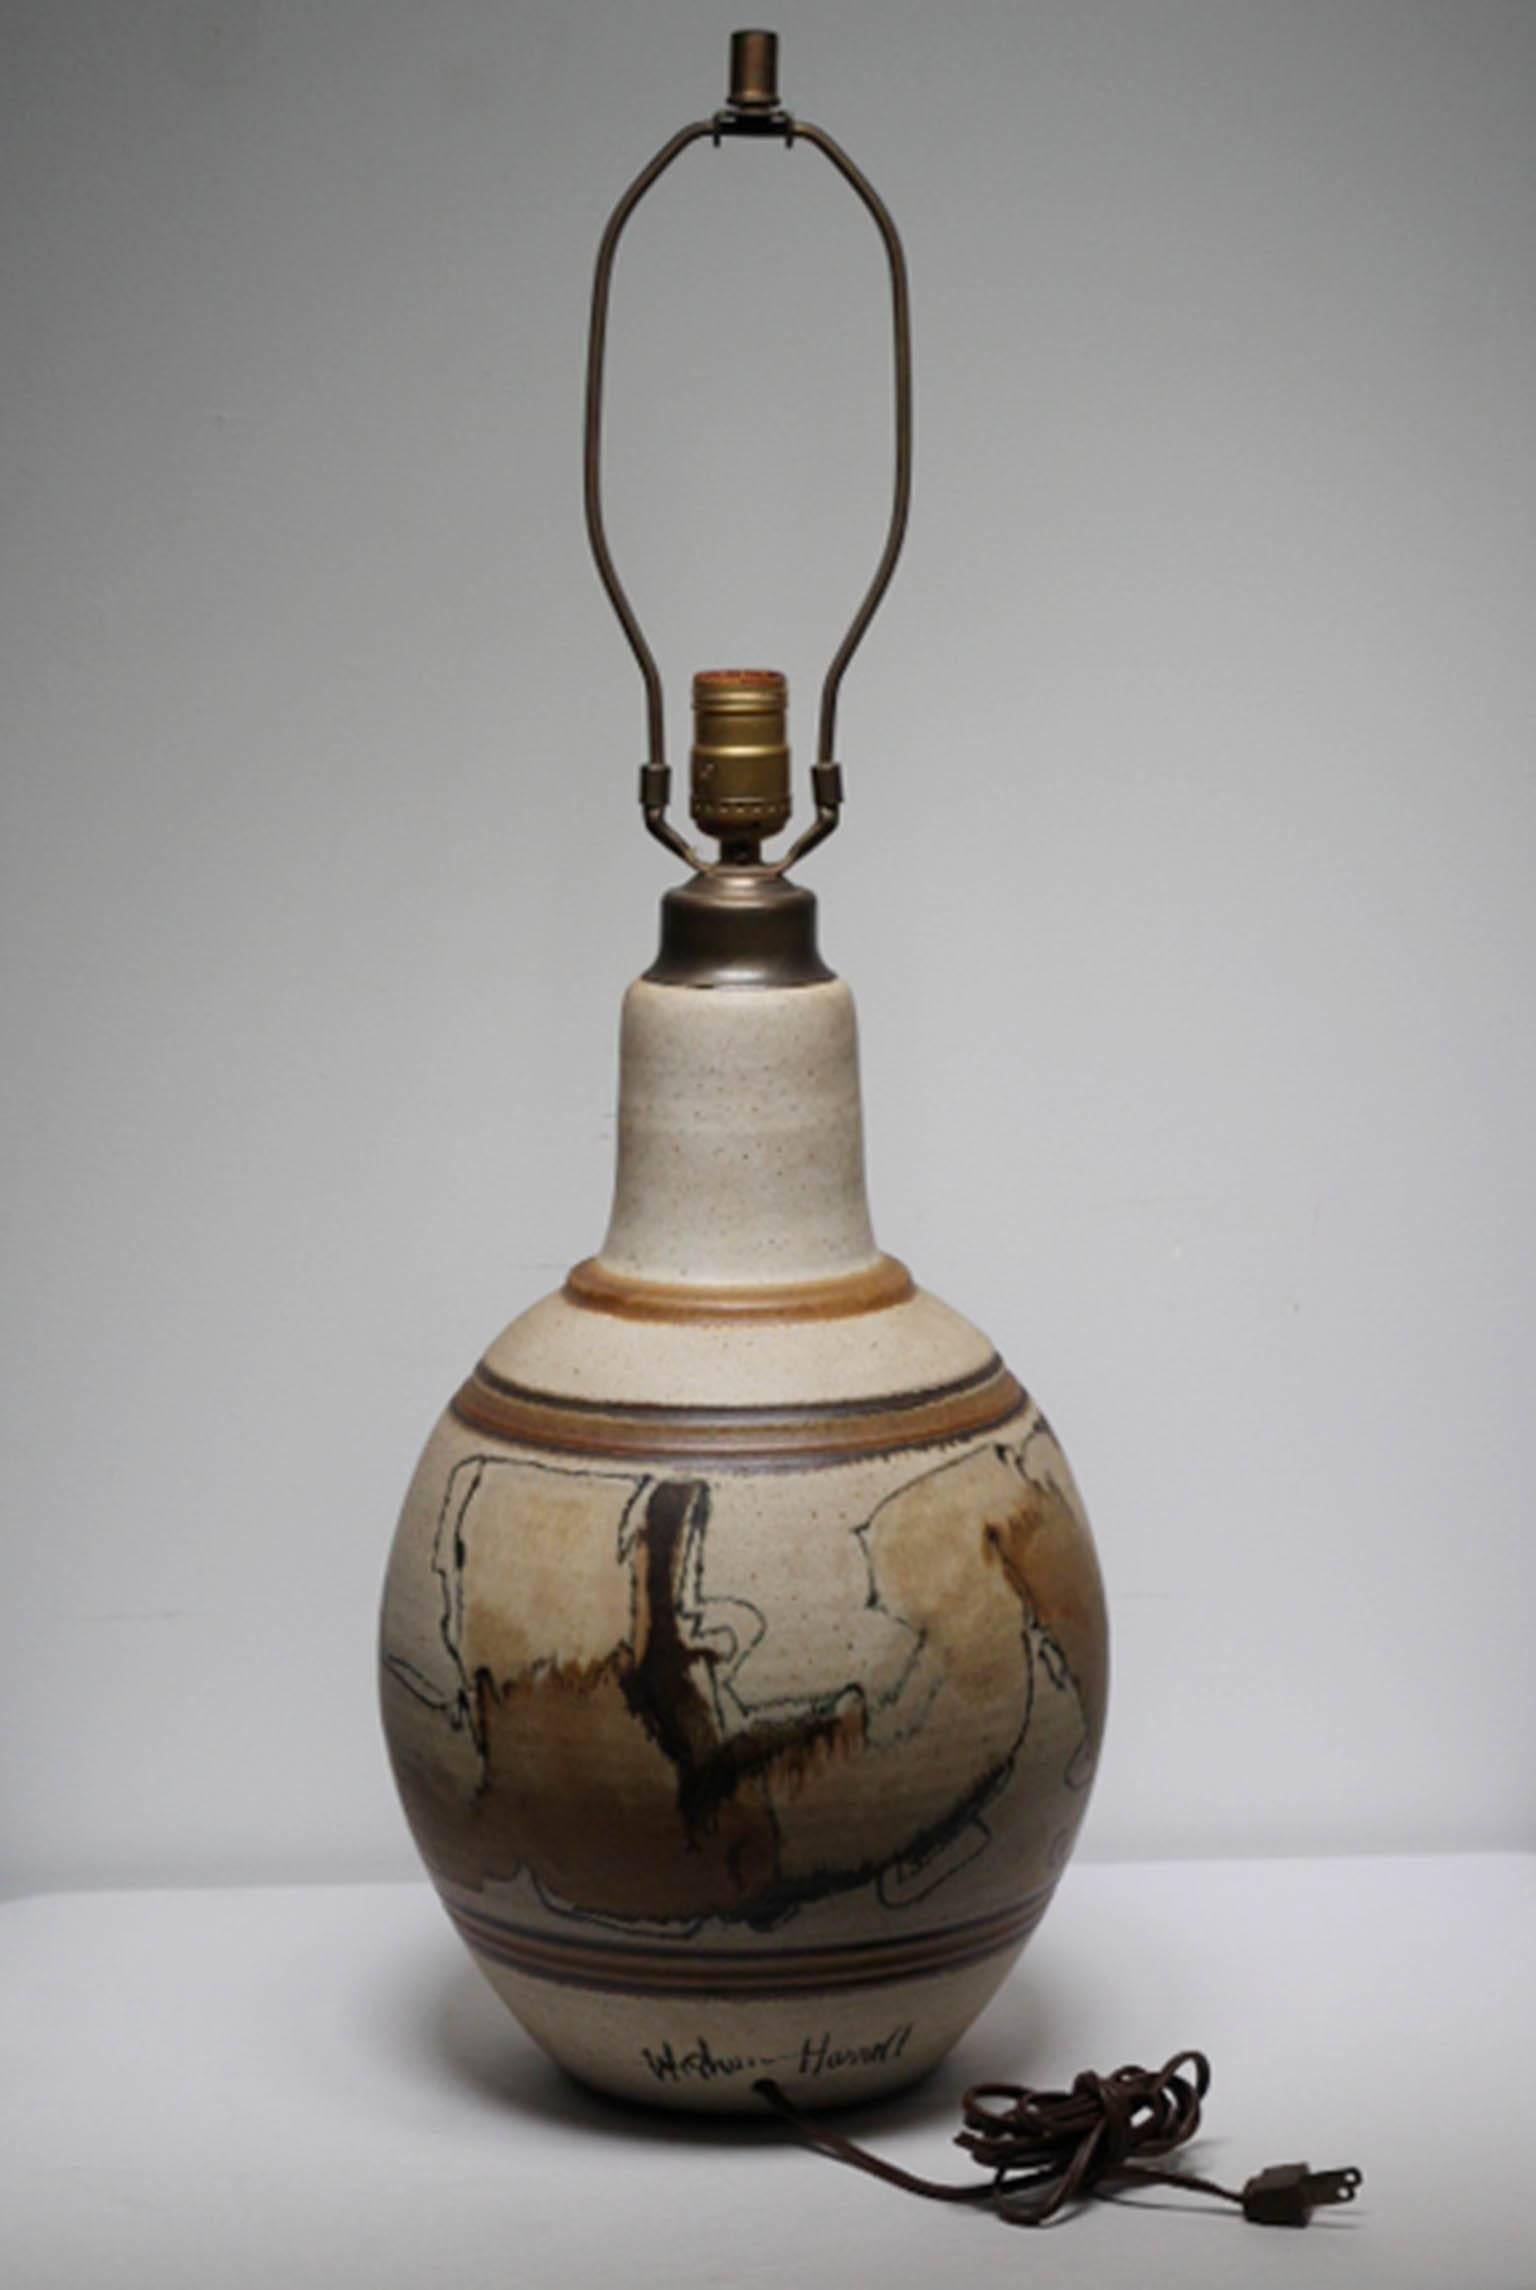 Mid-Century Modern Midcentury Wishon-Harrell Ceramic Table Lamp circa 1960s